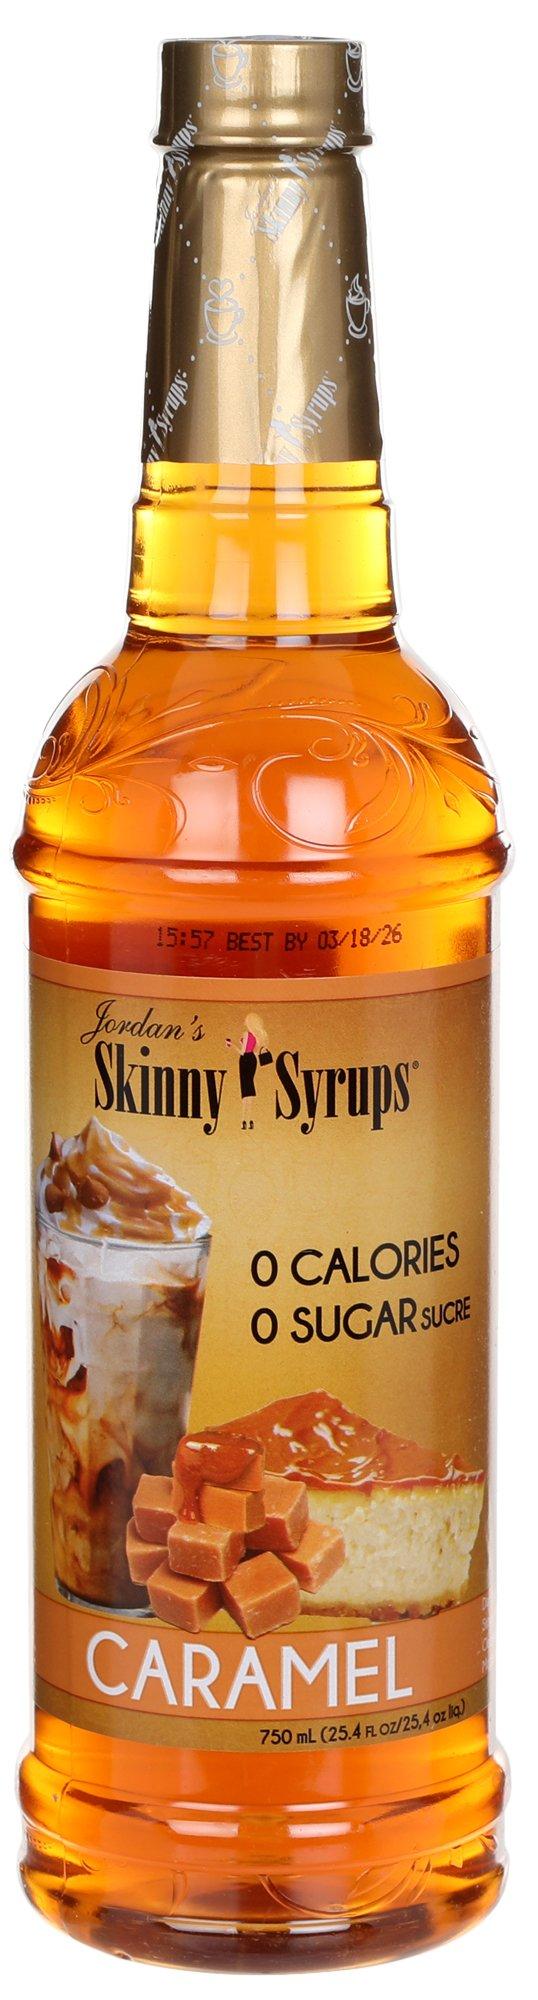 25 oz Caramel Syrup